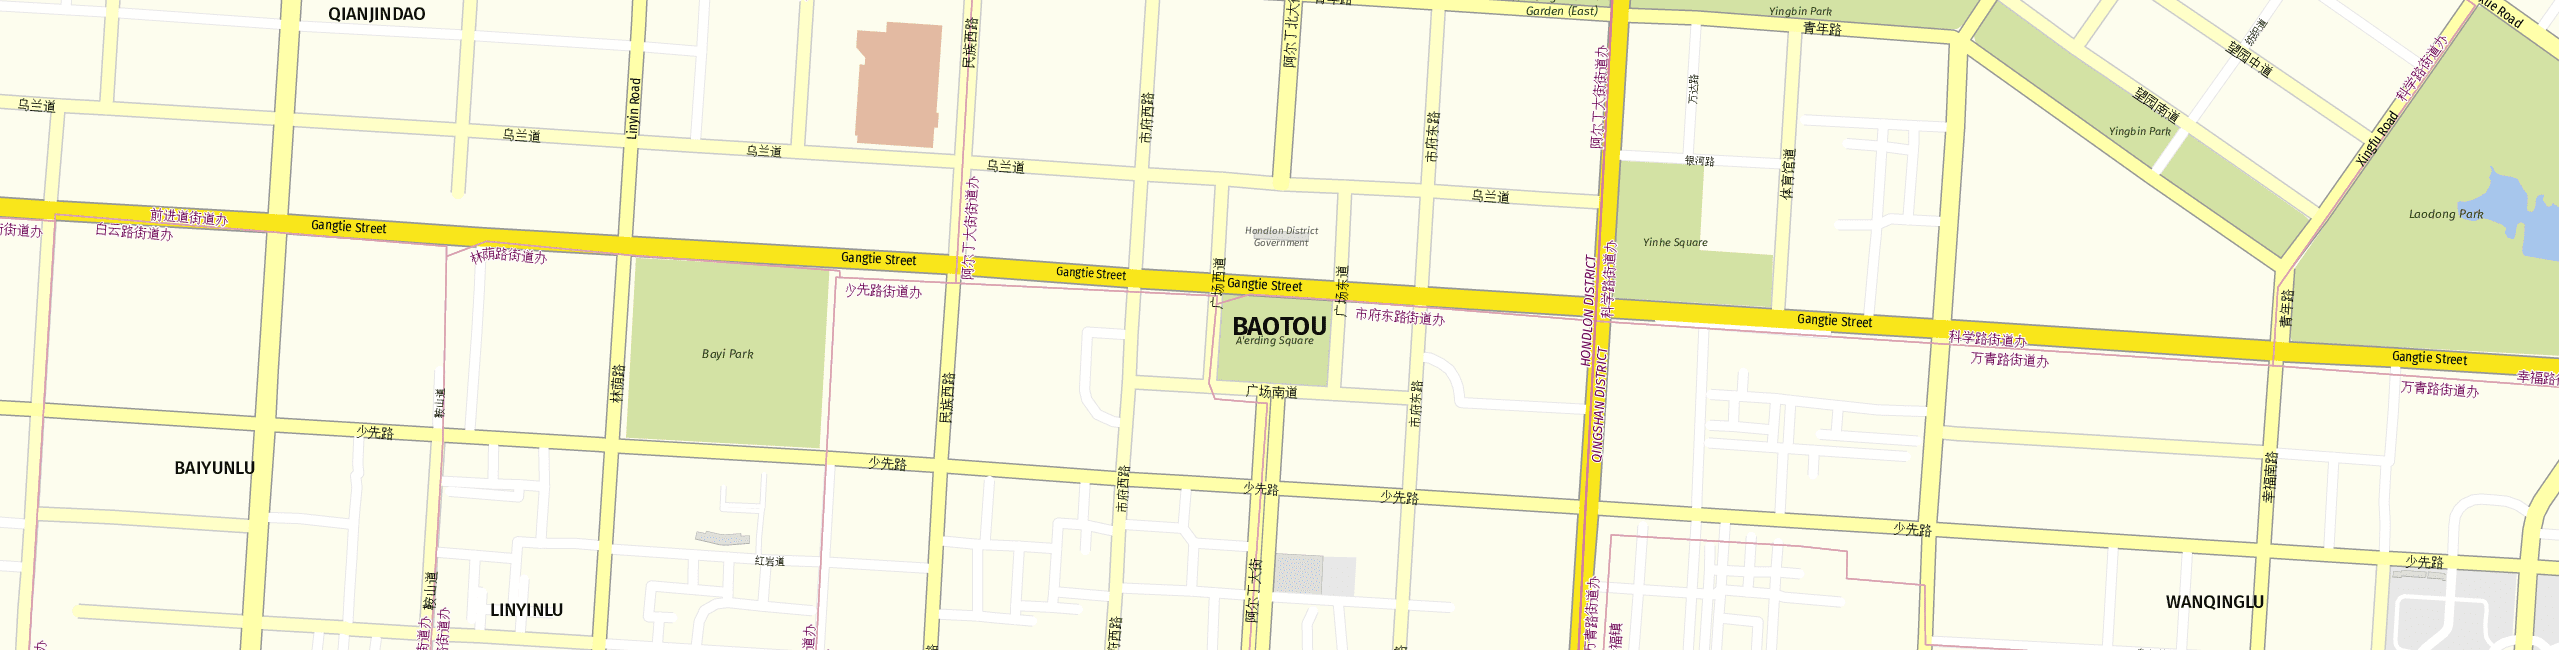 Stadtplan Baotou zum Downloaden.